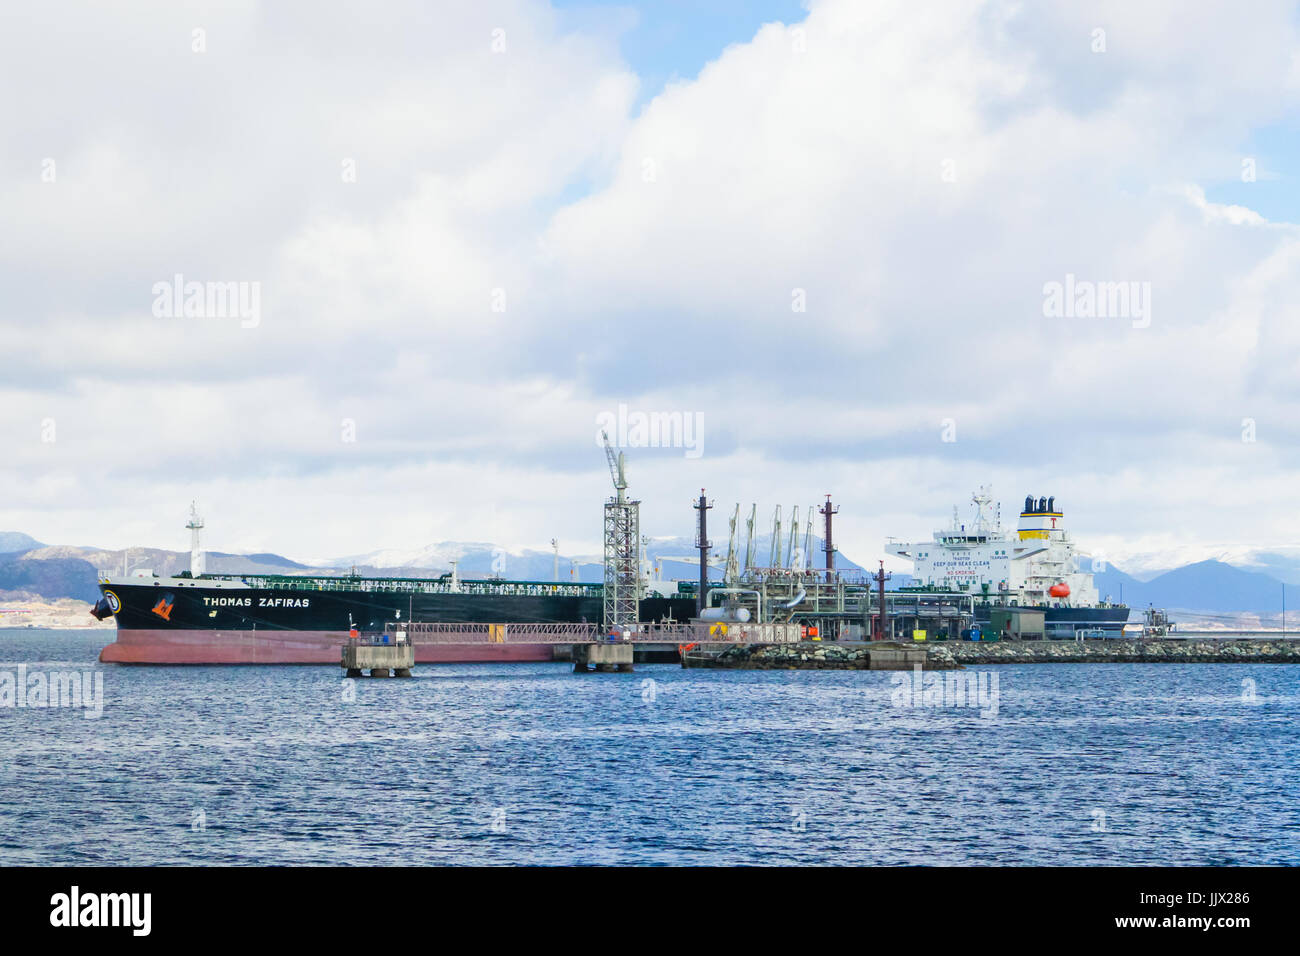 MONGSTAD, NORWAY - APRIL 22, 2017: Crude oil tranker Thomas Zafiras unloading at the Statoil Mongstad production facility. Stock Photo